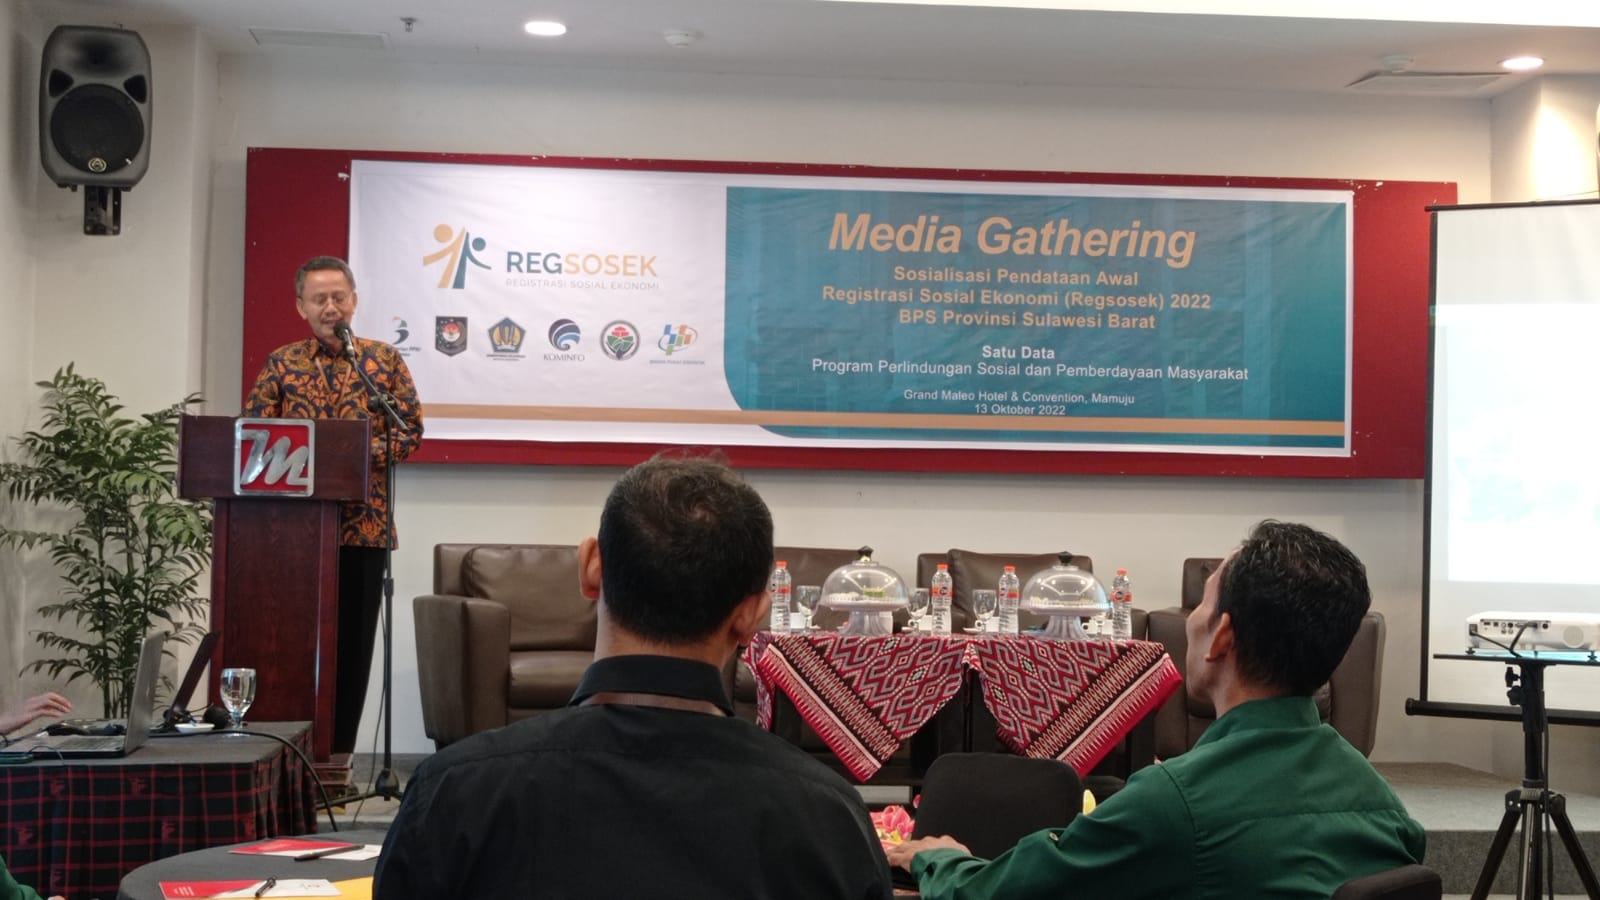 Gelar Media Gathering, Markus Uda : Pendataan Awal Regsosek Dilakukan Secara Door To Door